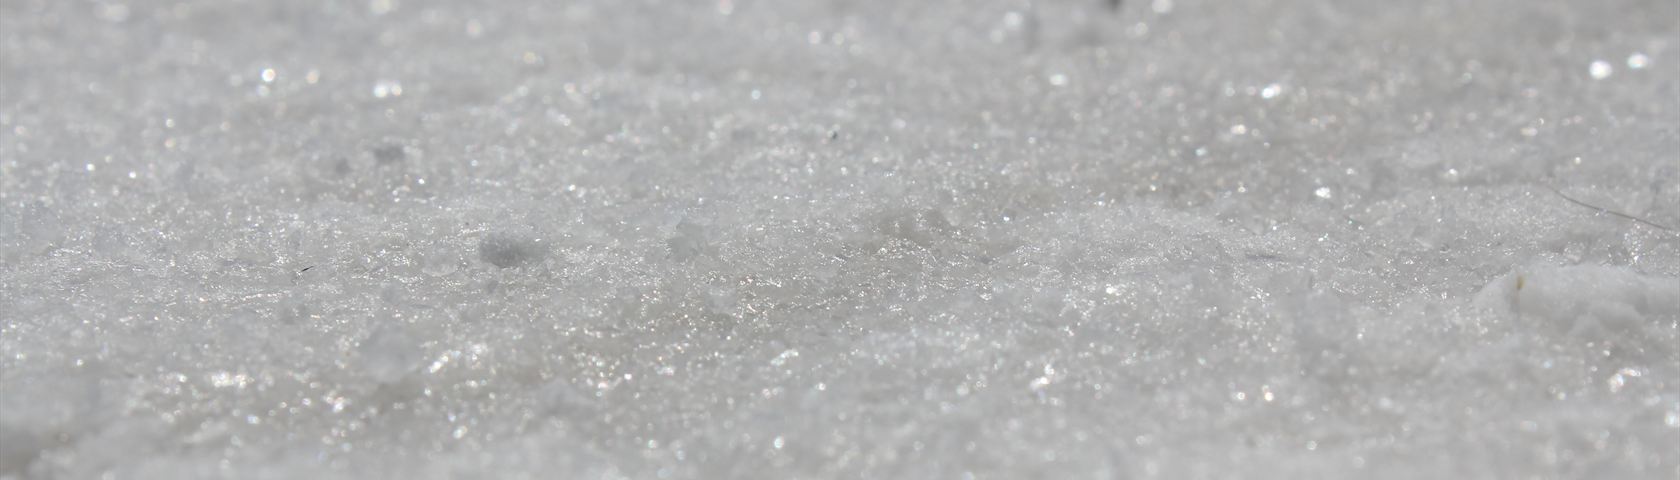 Bonneville Salt